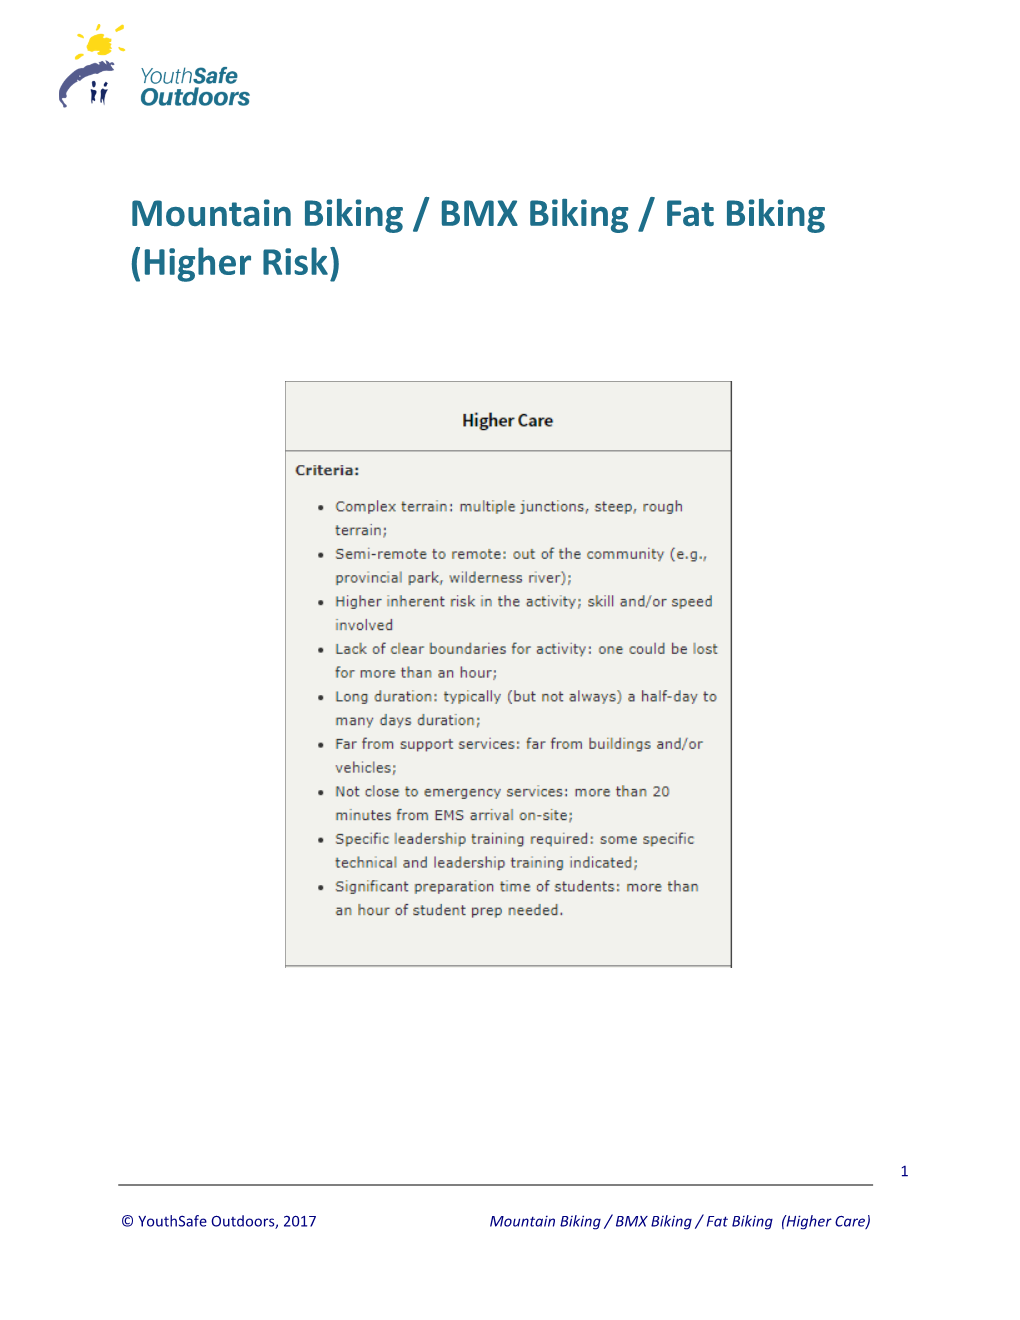 Mountain Biking / BMX Biking / Fat Biking (Higher Risk)